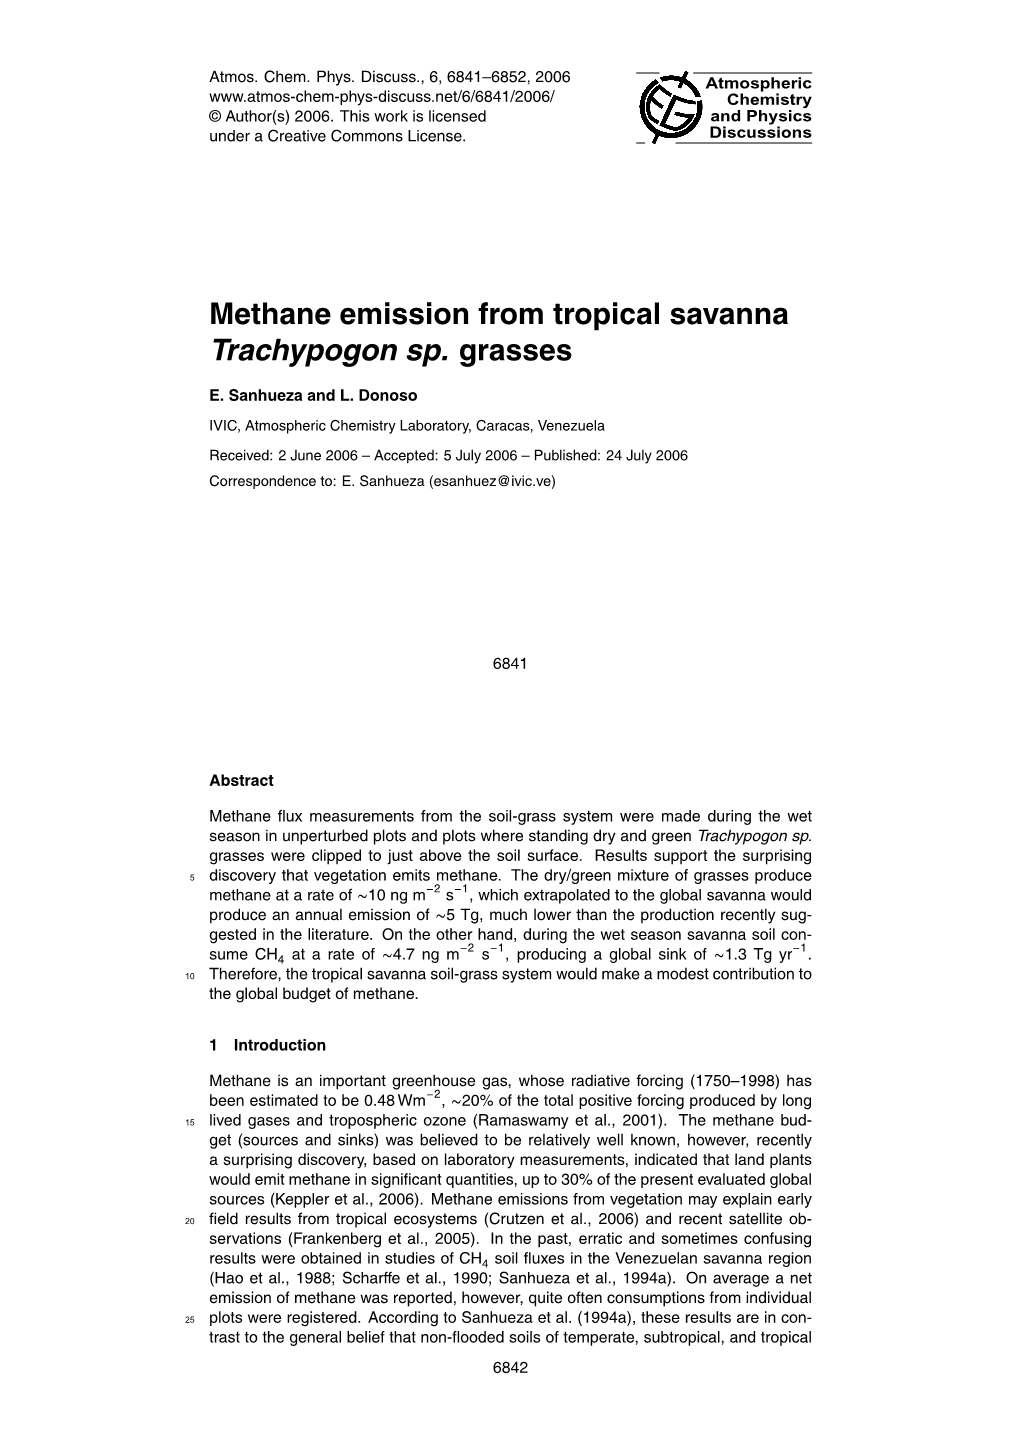 Methane Emission from Tropical Savanna Trachypogon Sp. Grasses